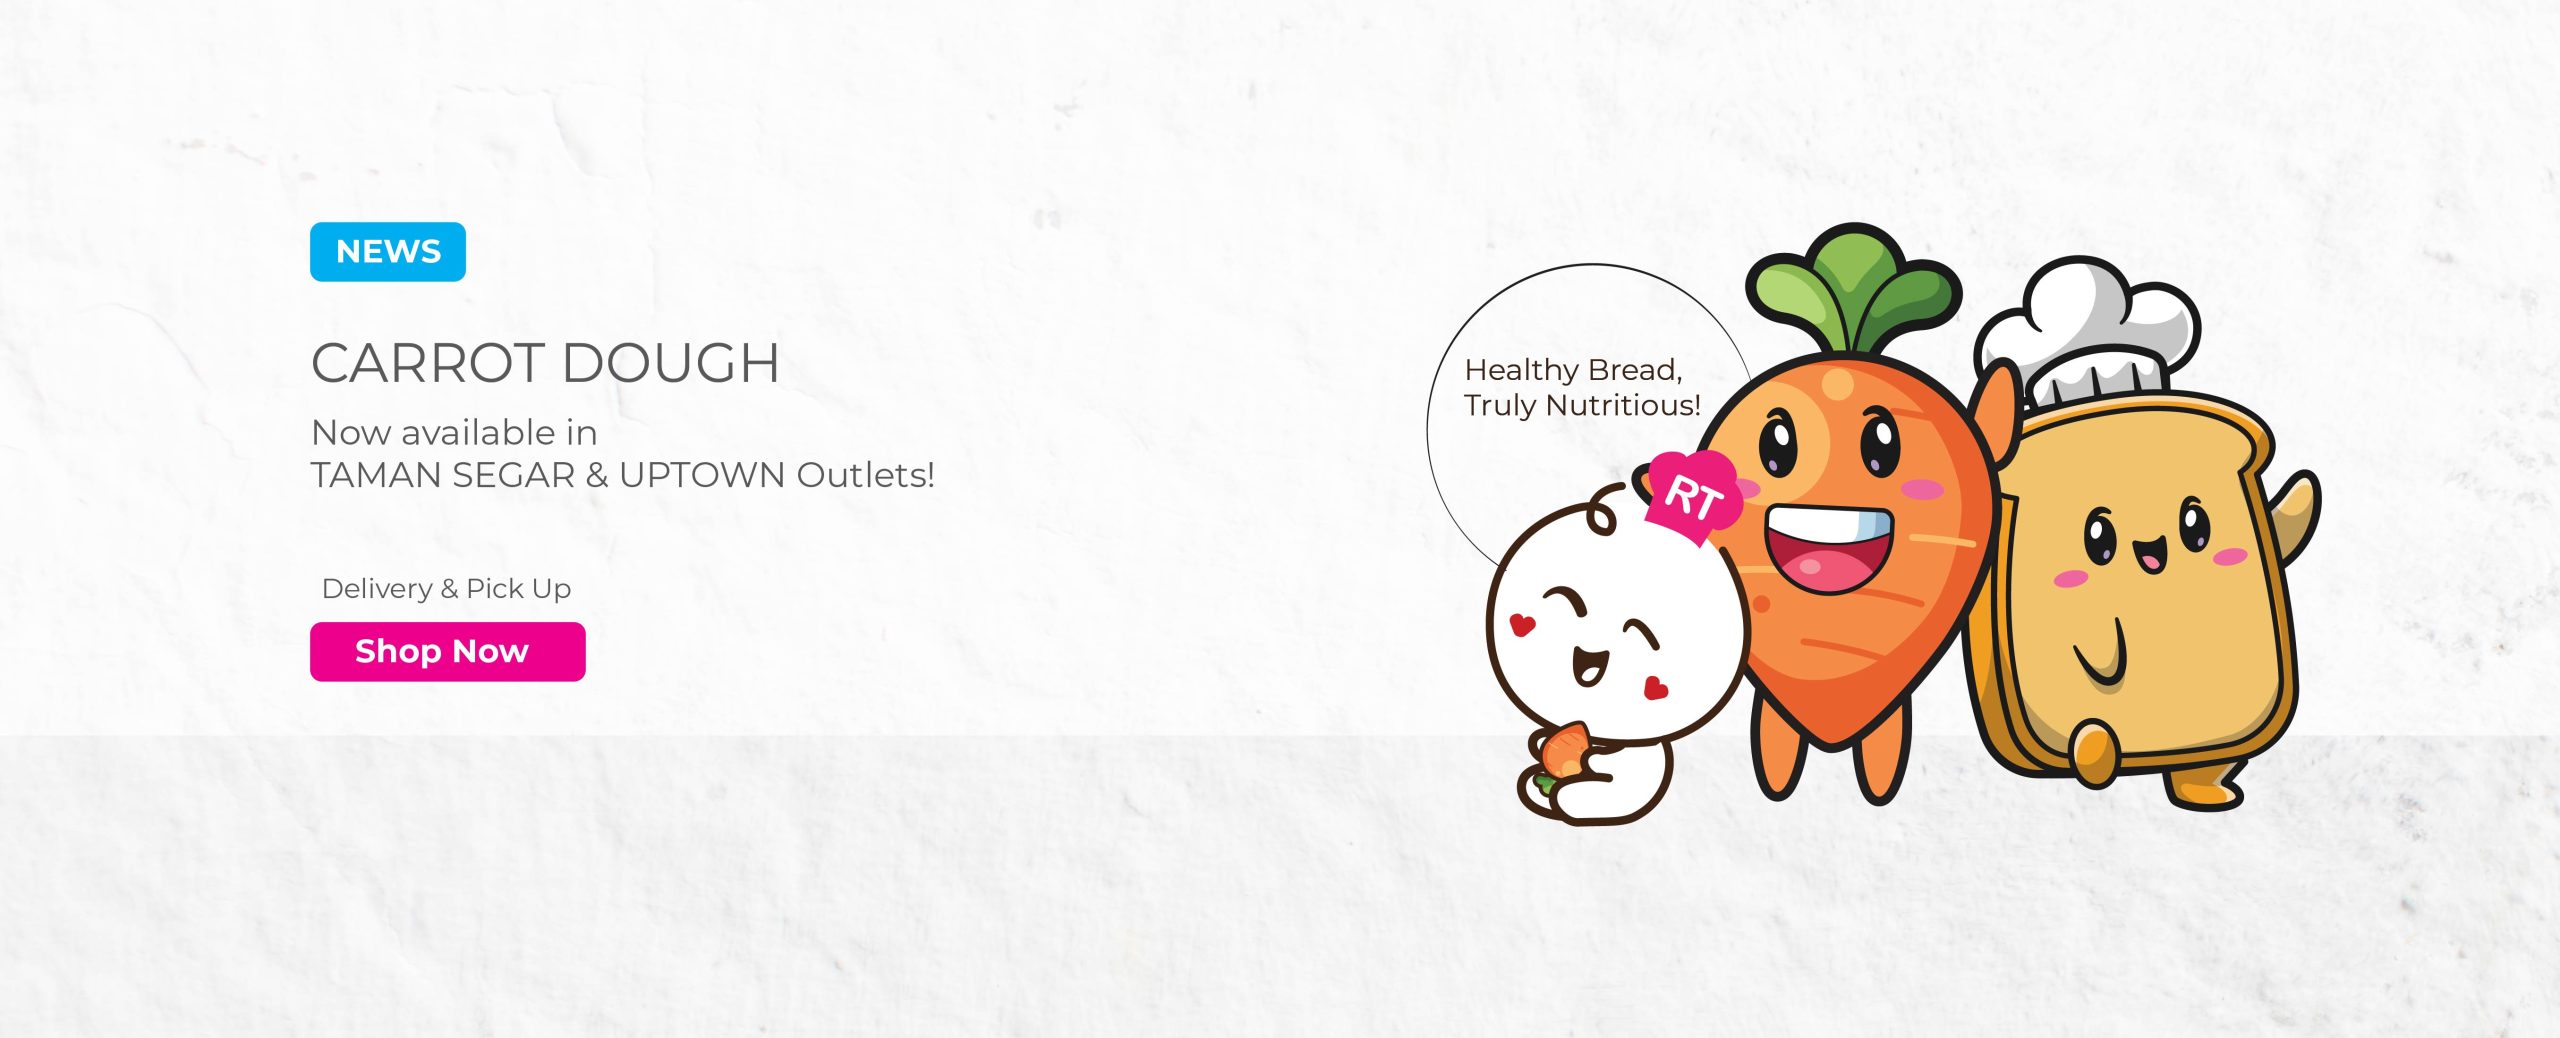 TS UPT carrot dough web banner-01